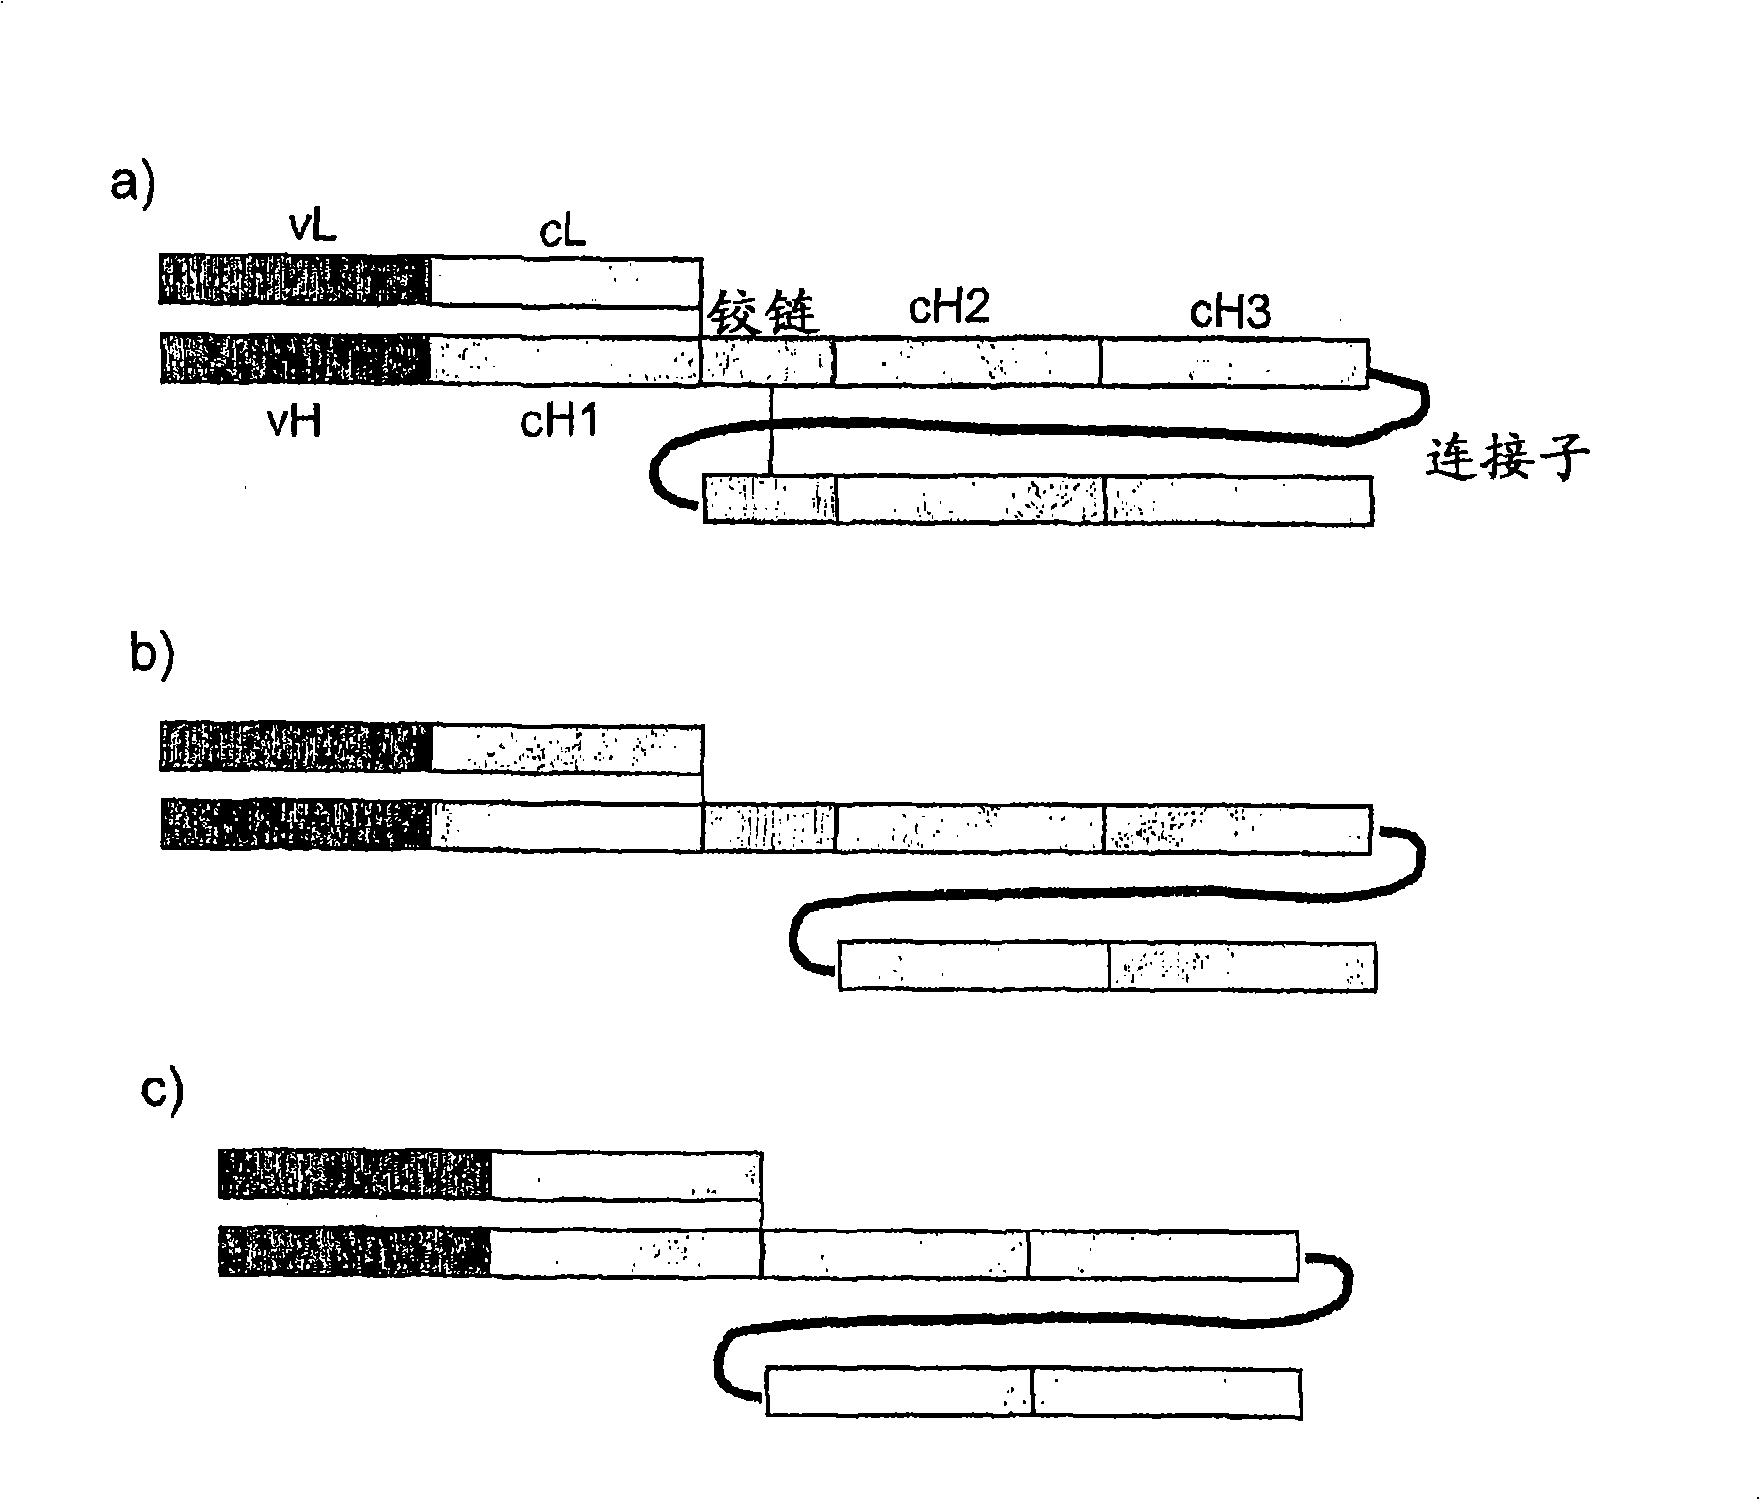 Single chain FC polypeptides